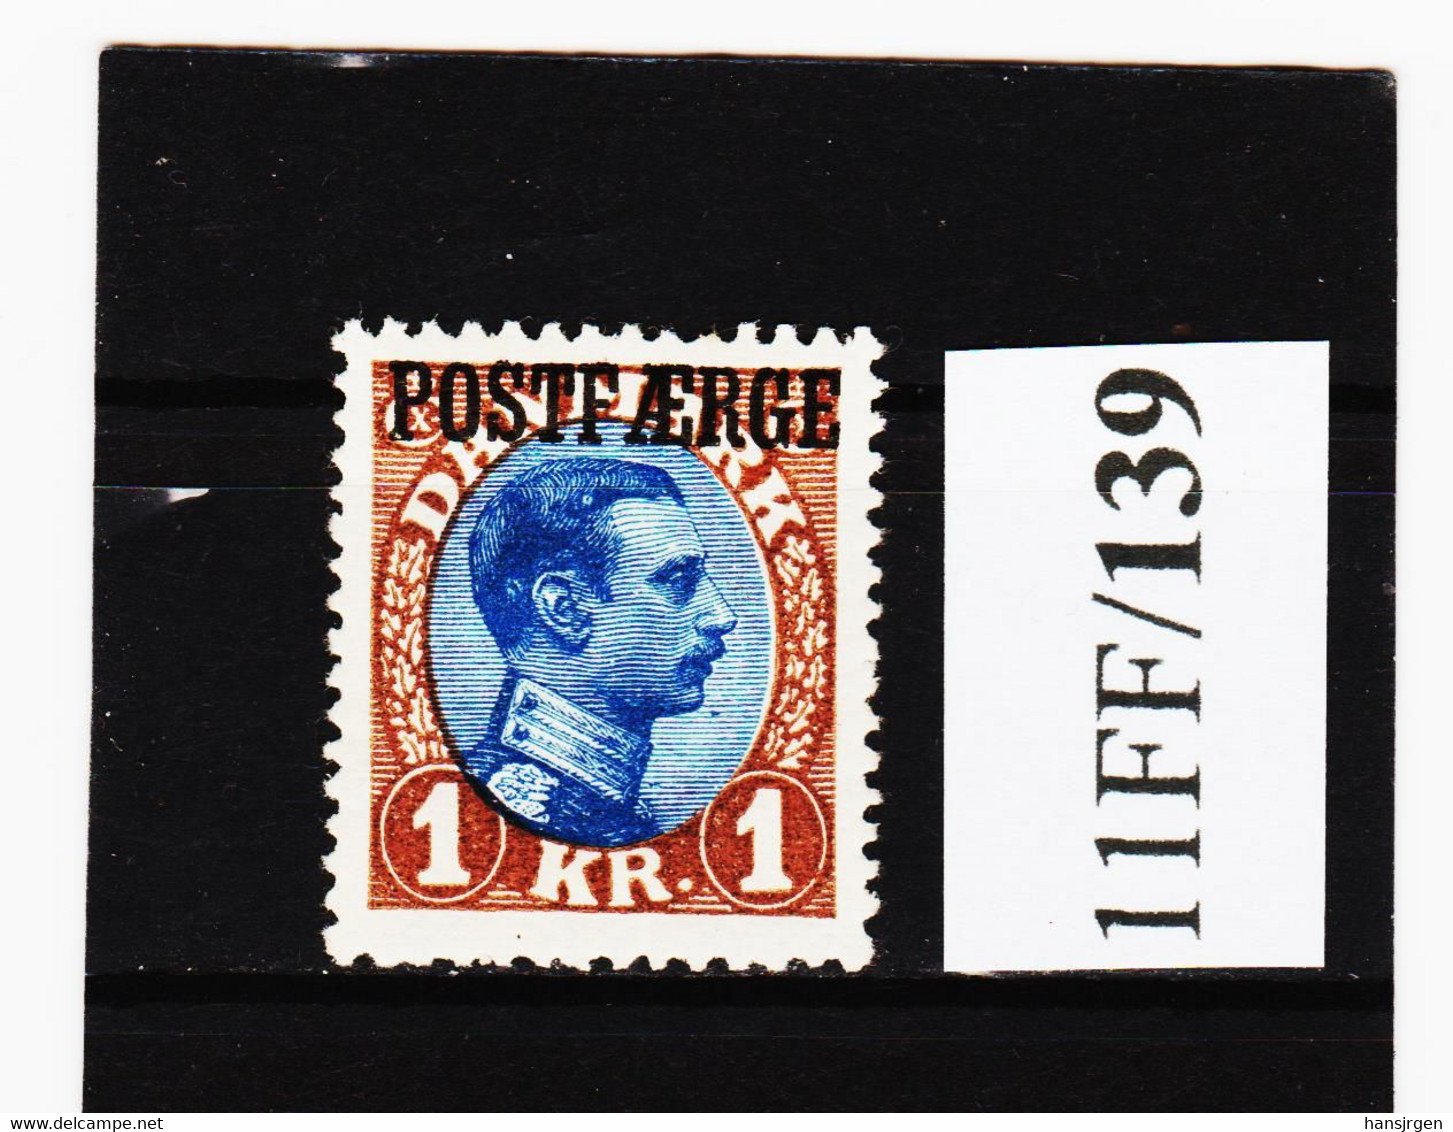 11FF/139 DÄNEMARK POSTFAERGE 1922  Michl  10  (*) FALZ SIEHE ABBILDUNG - Paquetes Postales